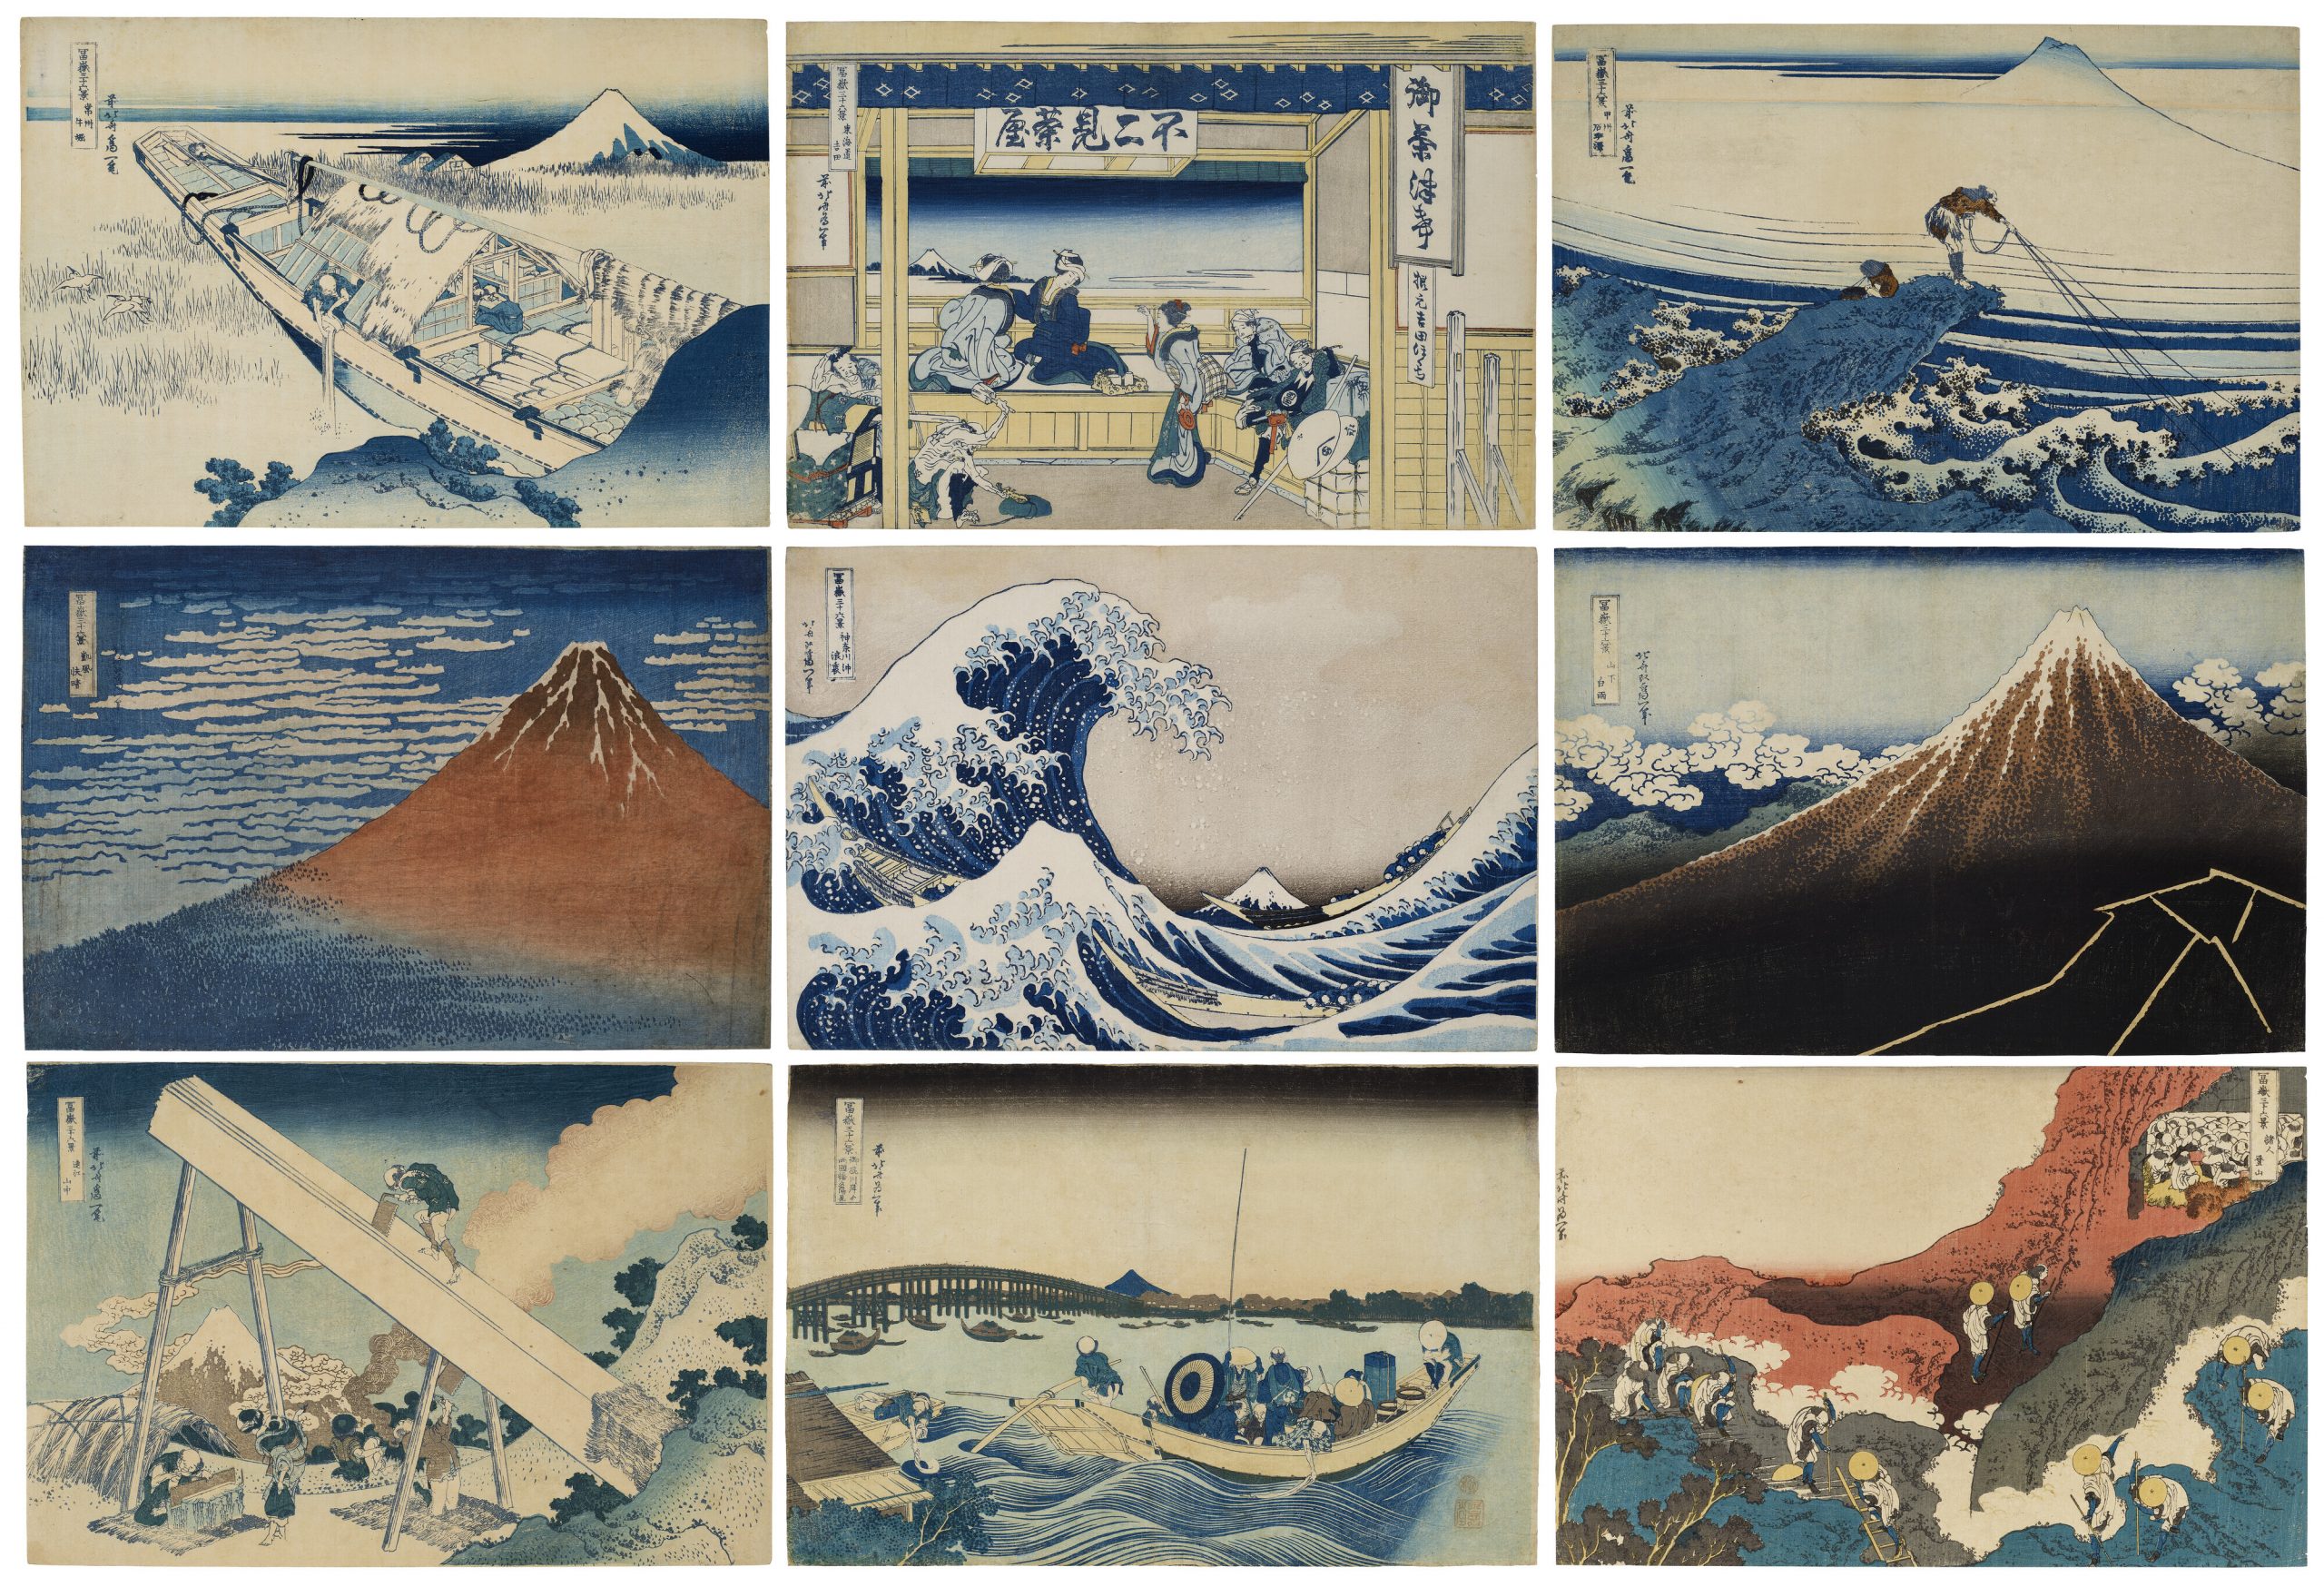 Work of the Week: Katsushika Hokusai’s ‘Thirty-Six Views of Mount Fuji’